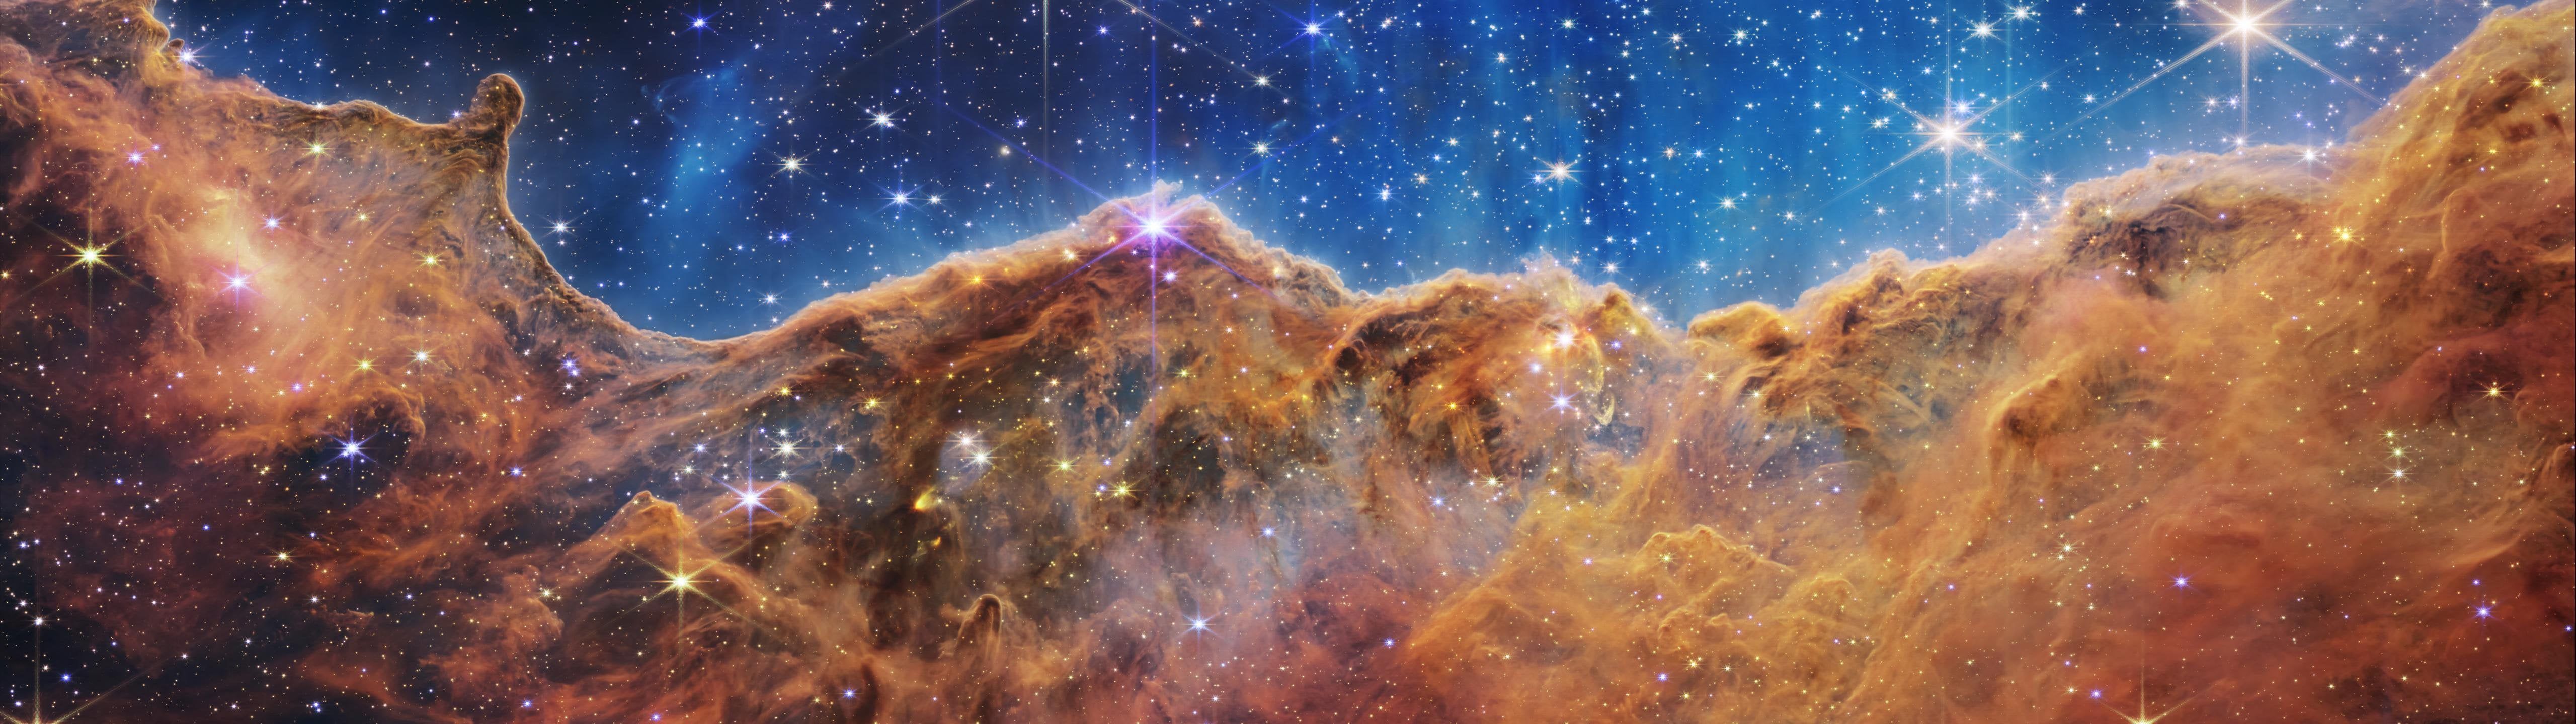 Wallpaper James Webb (Carina Nebula)